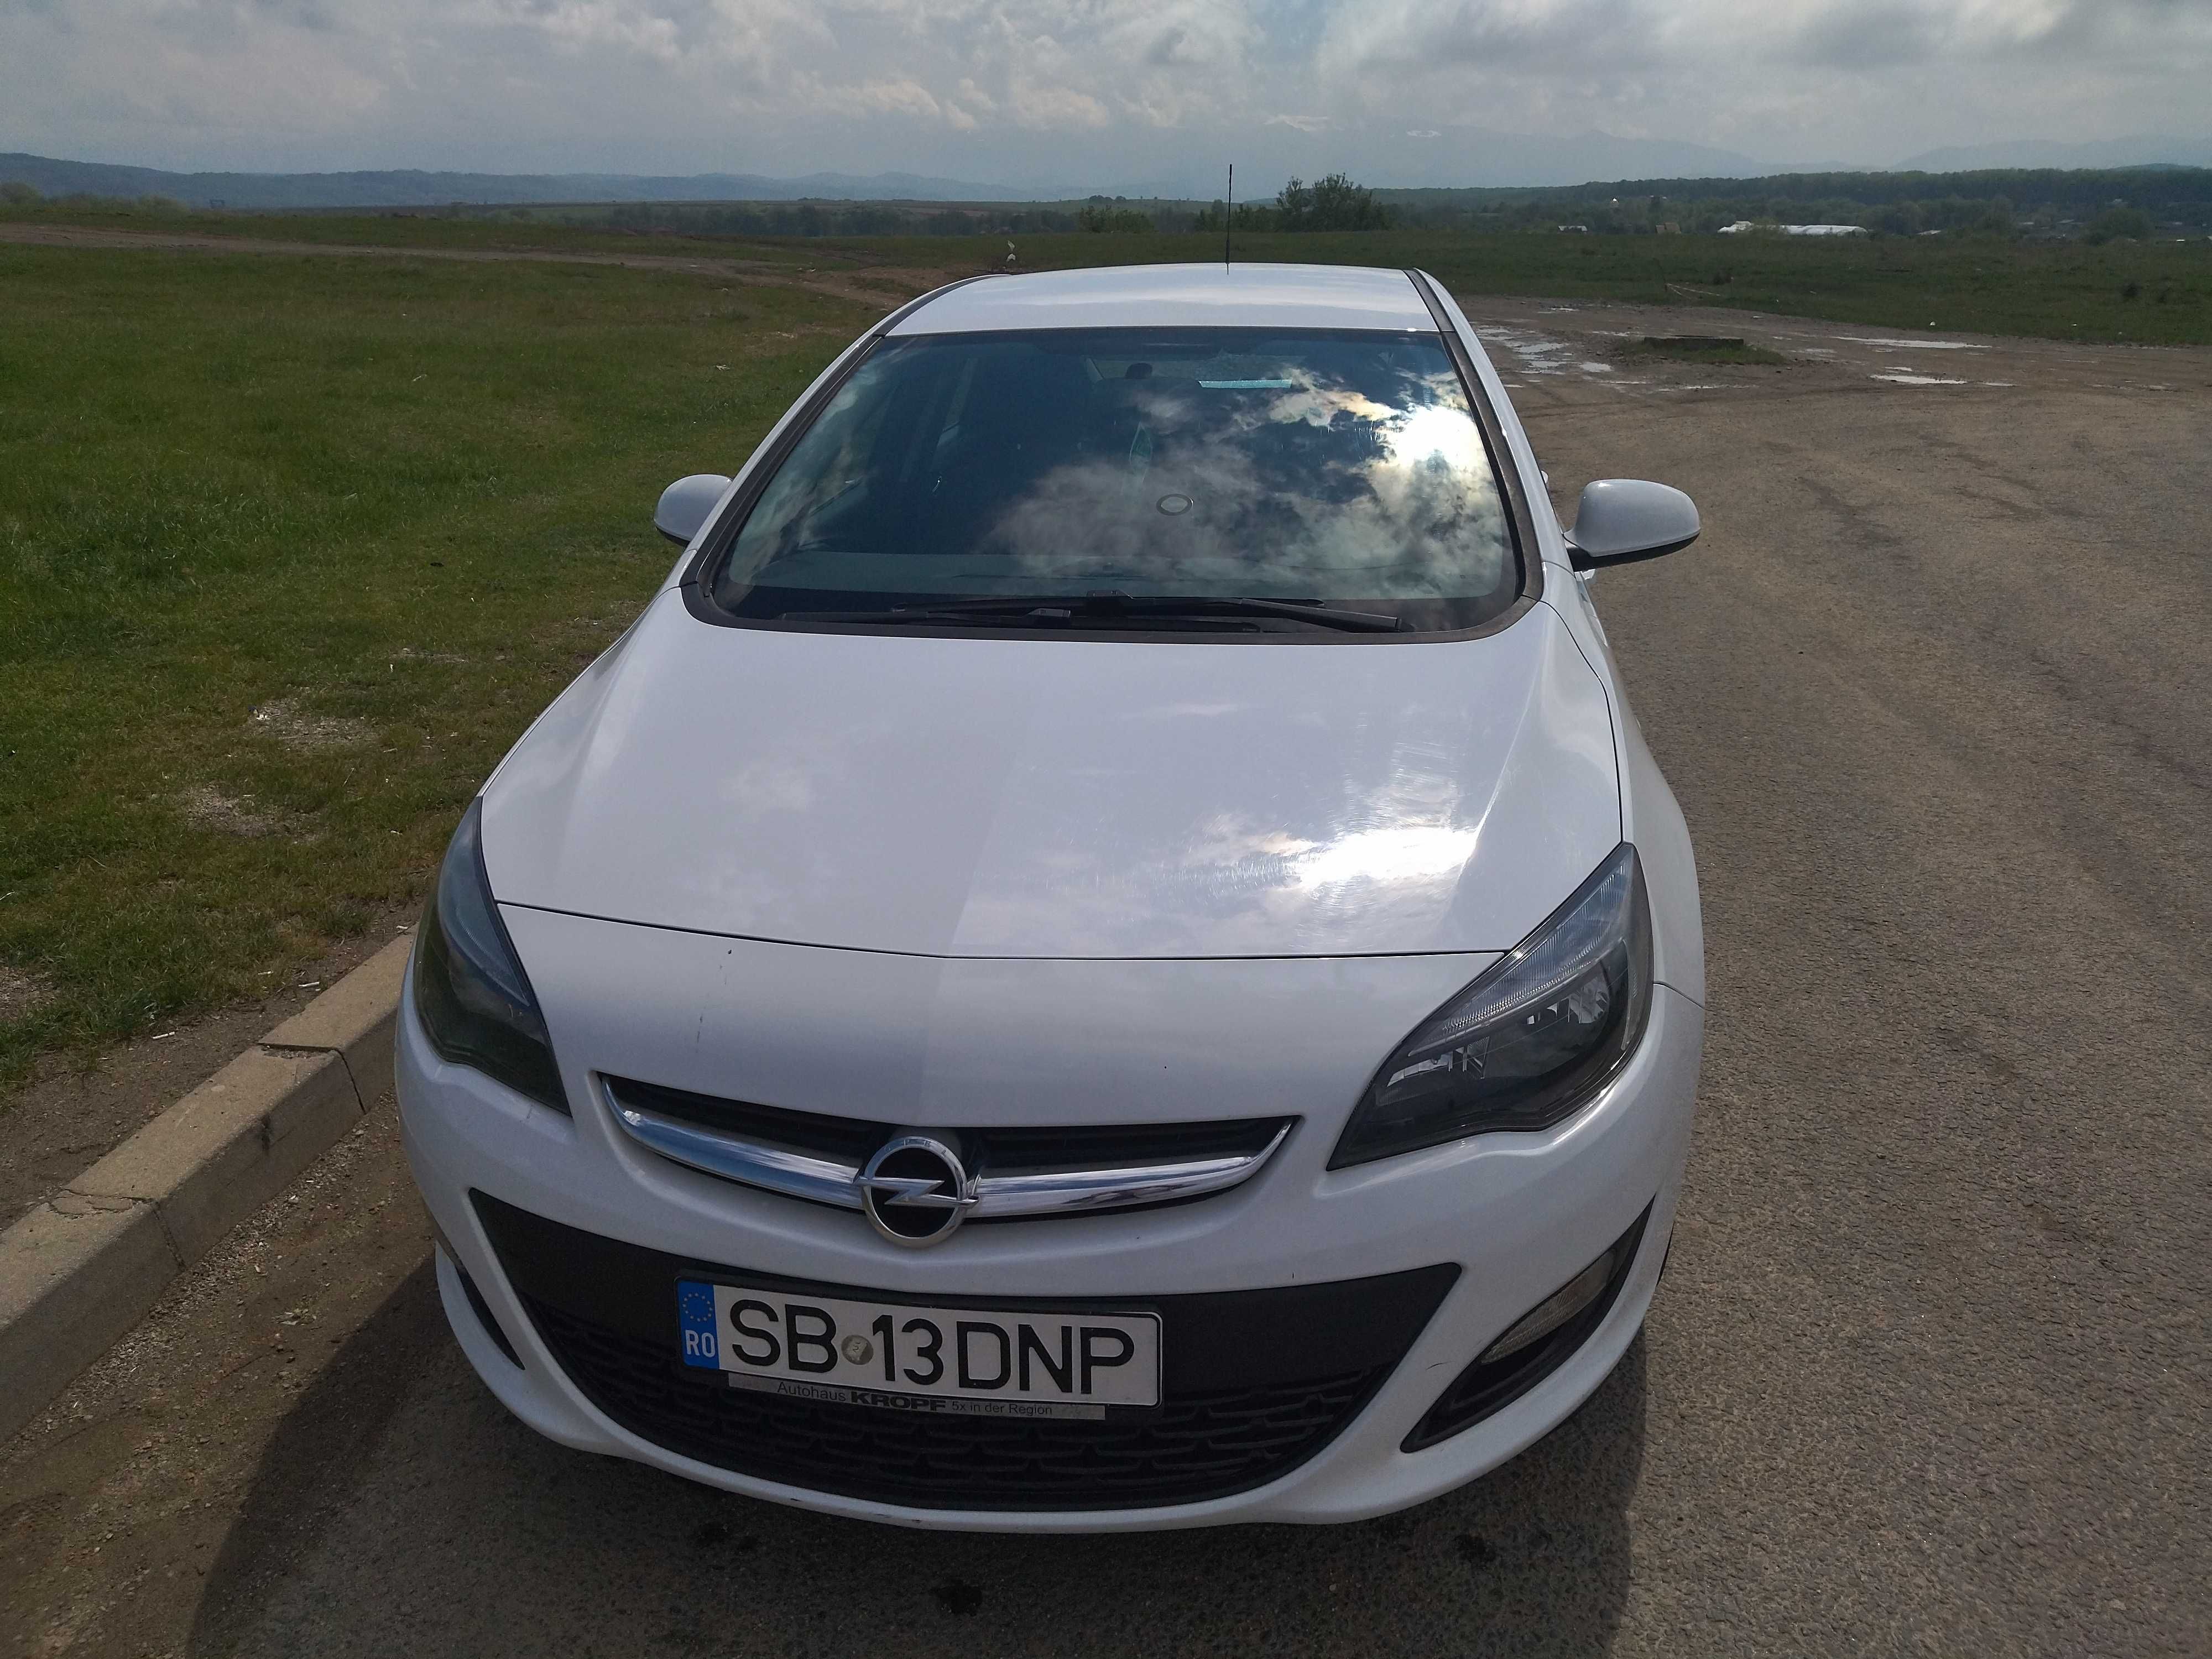 Opel Astra J 2014 140 CP